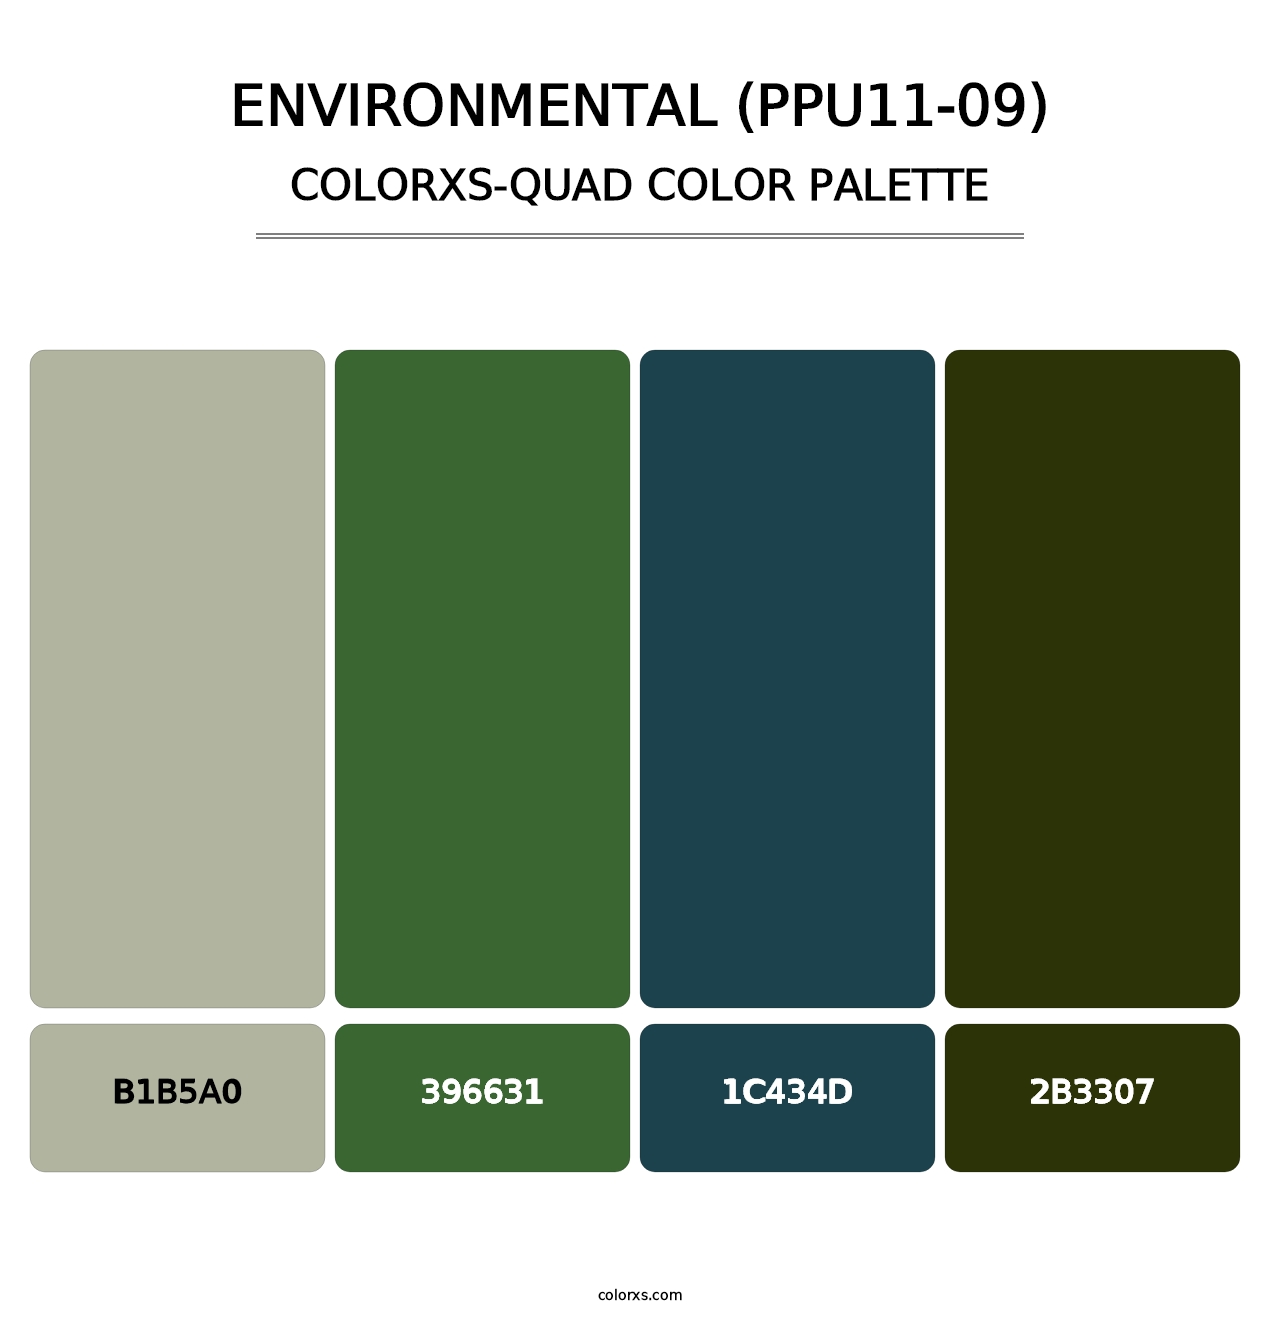 Environmental (PPU11-09) - Colorxs Quad Palette